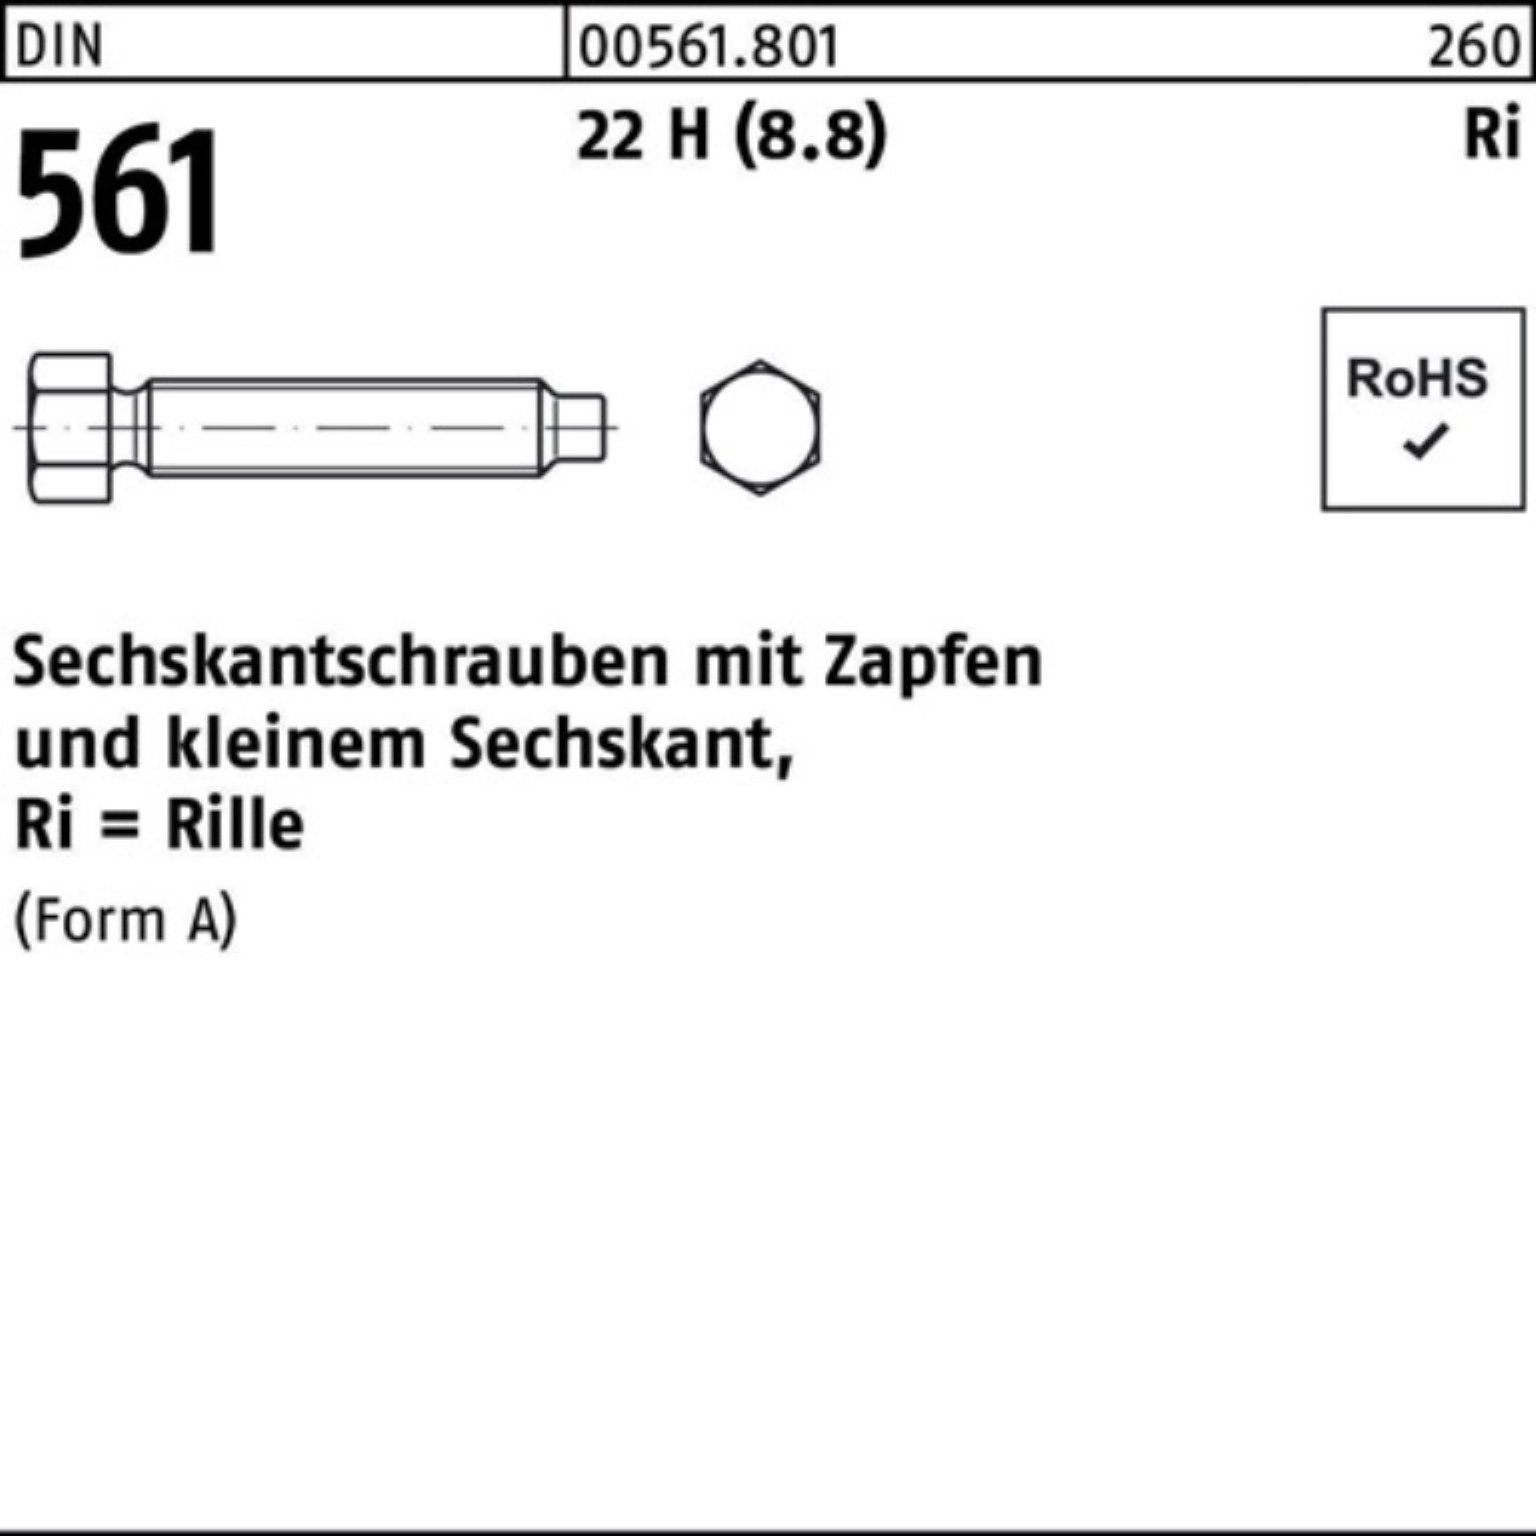 Reyher Sechskantschraube 100er Pack Sechskantschraube DIN 561 Zapfen AM 6x 16 22 H (8.8) 100 St